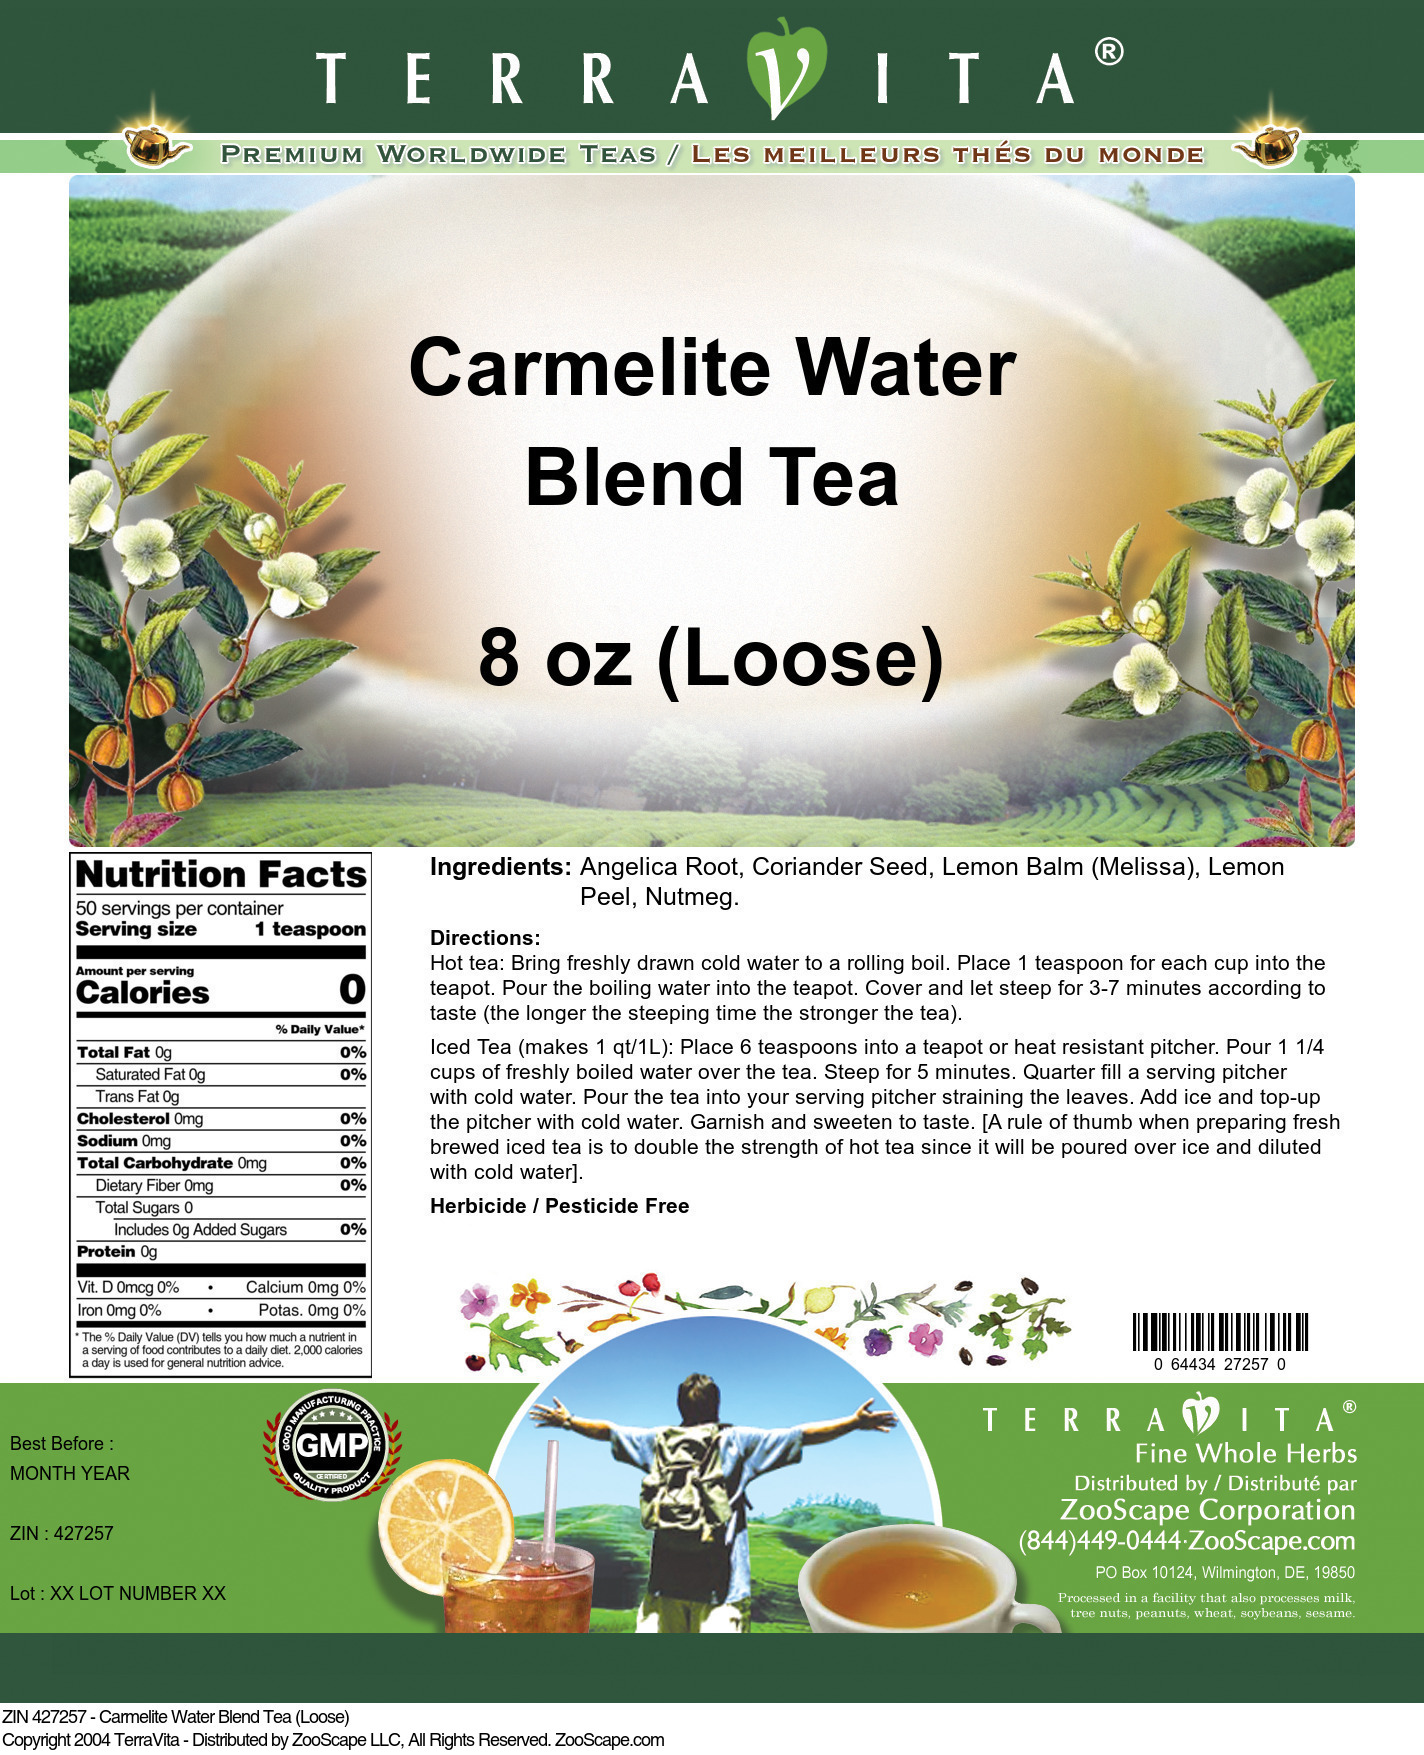 Carmelite Water Blend Tea (Loose) - Label